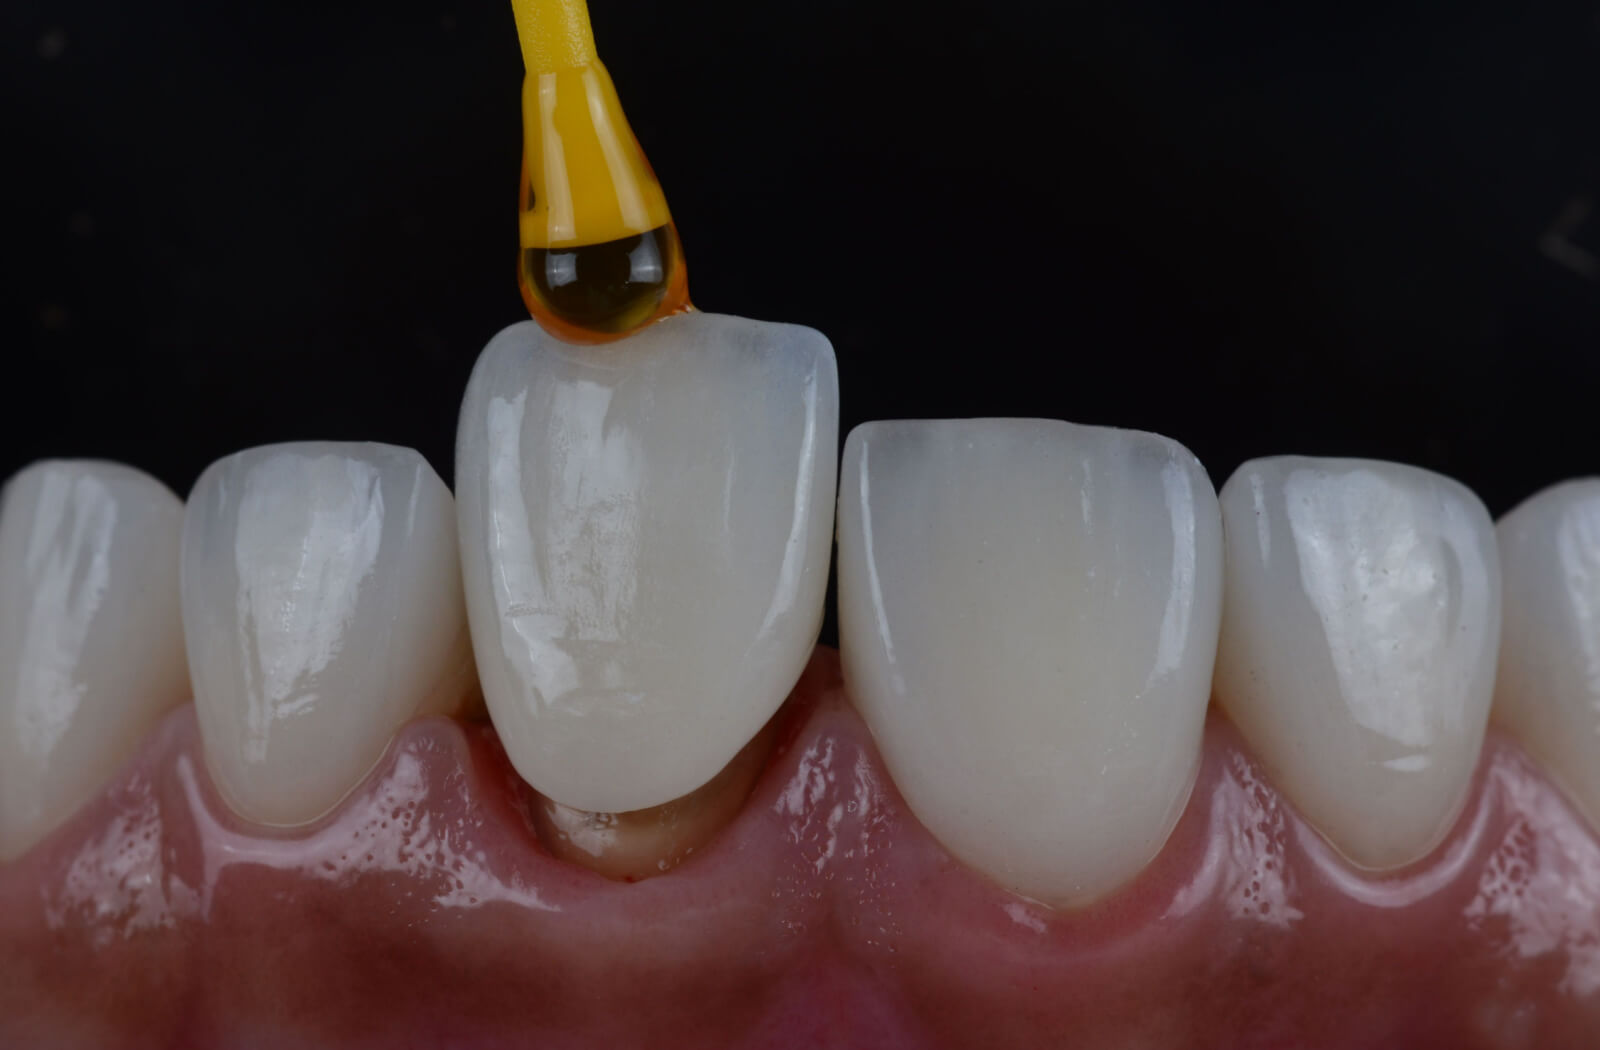 Front Tooth Zirconia Implants